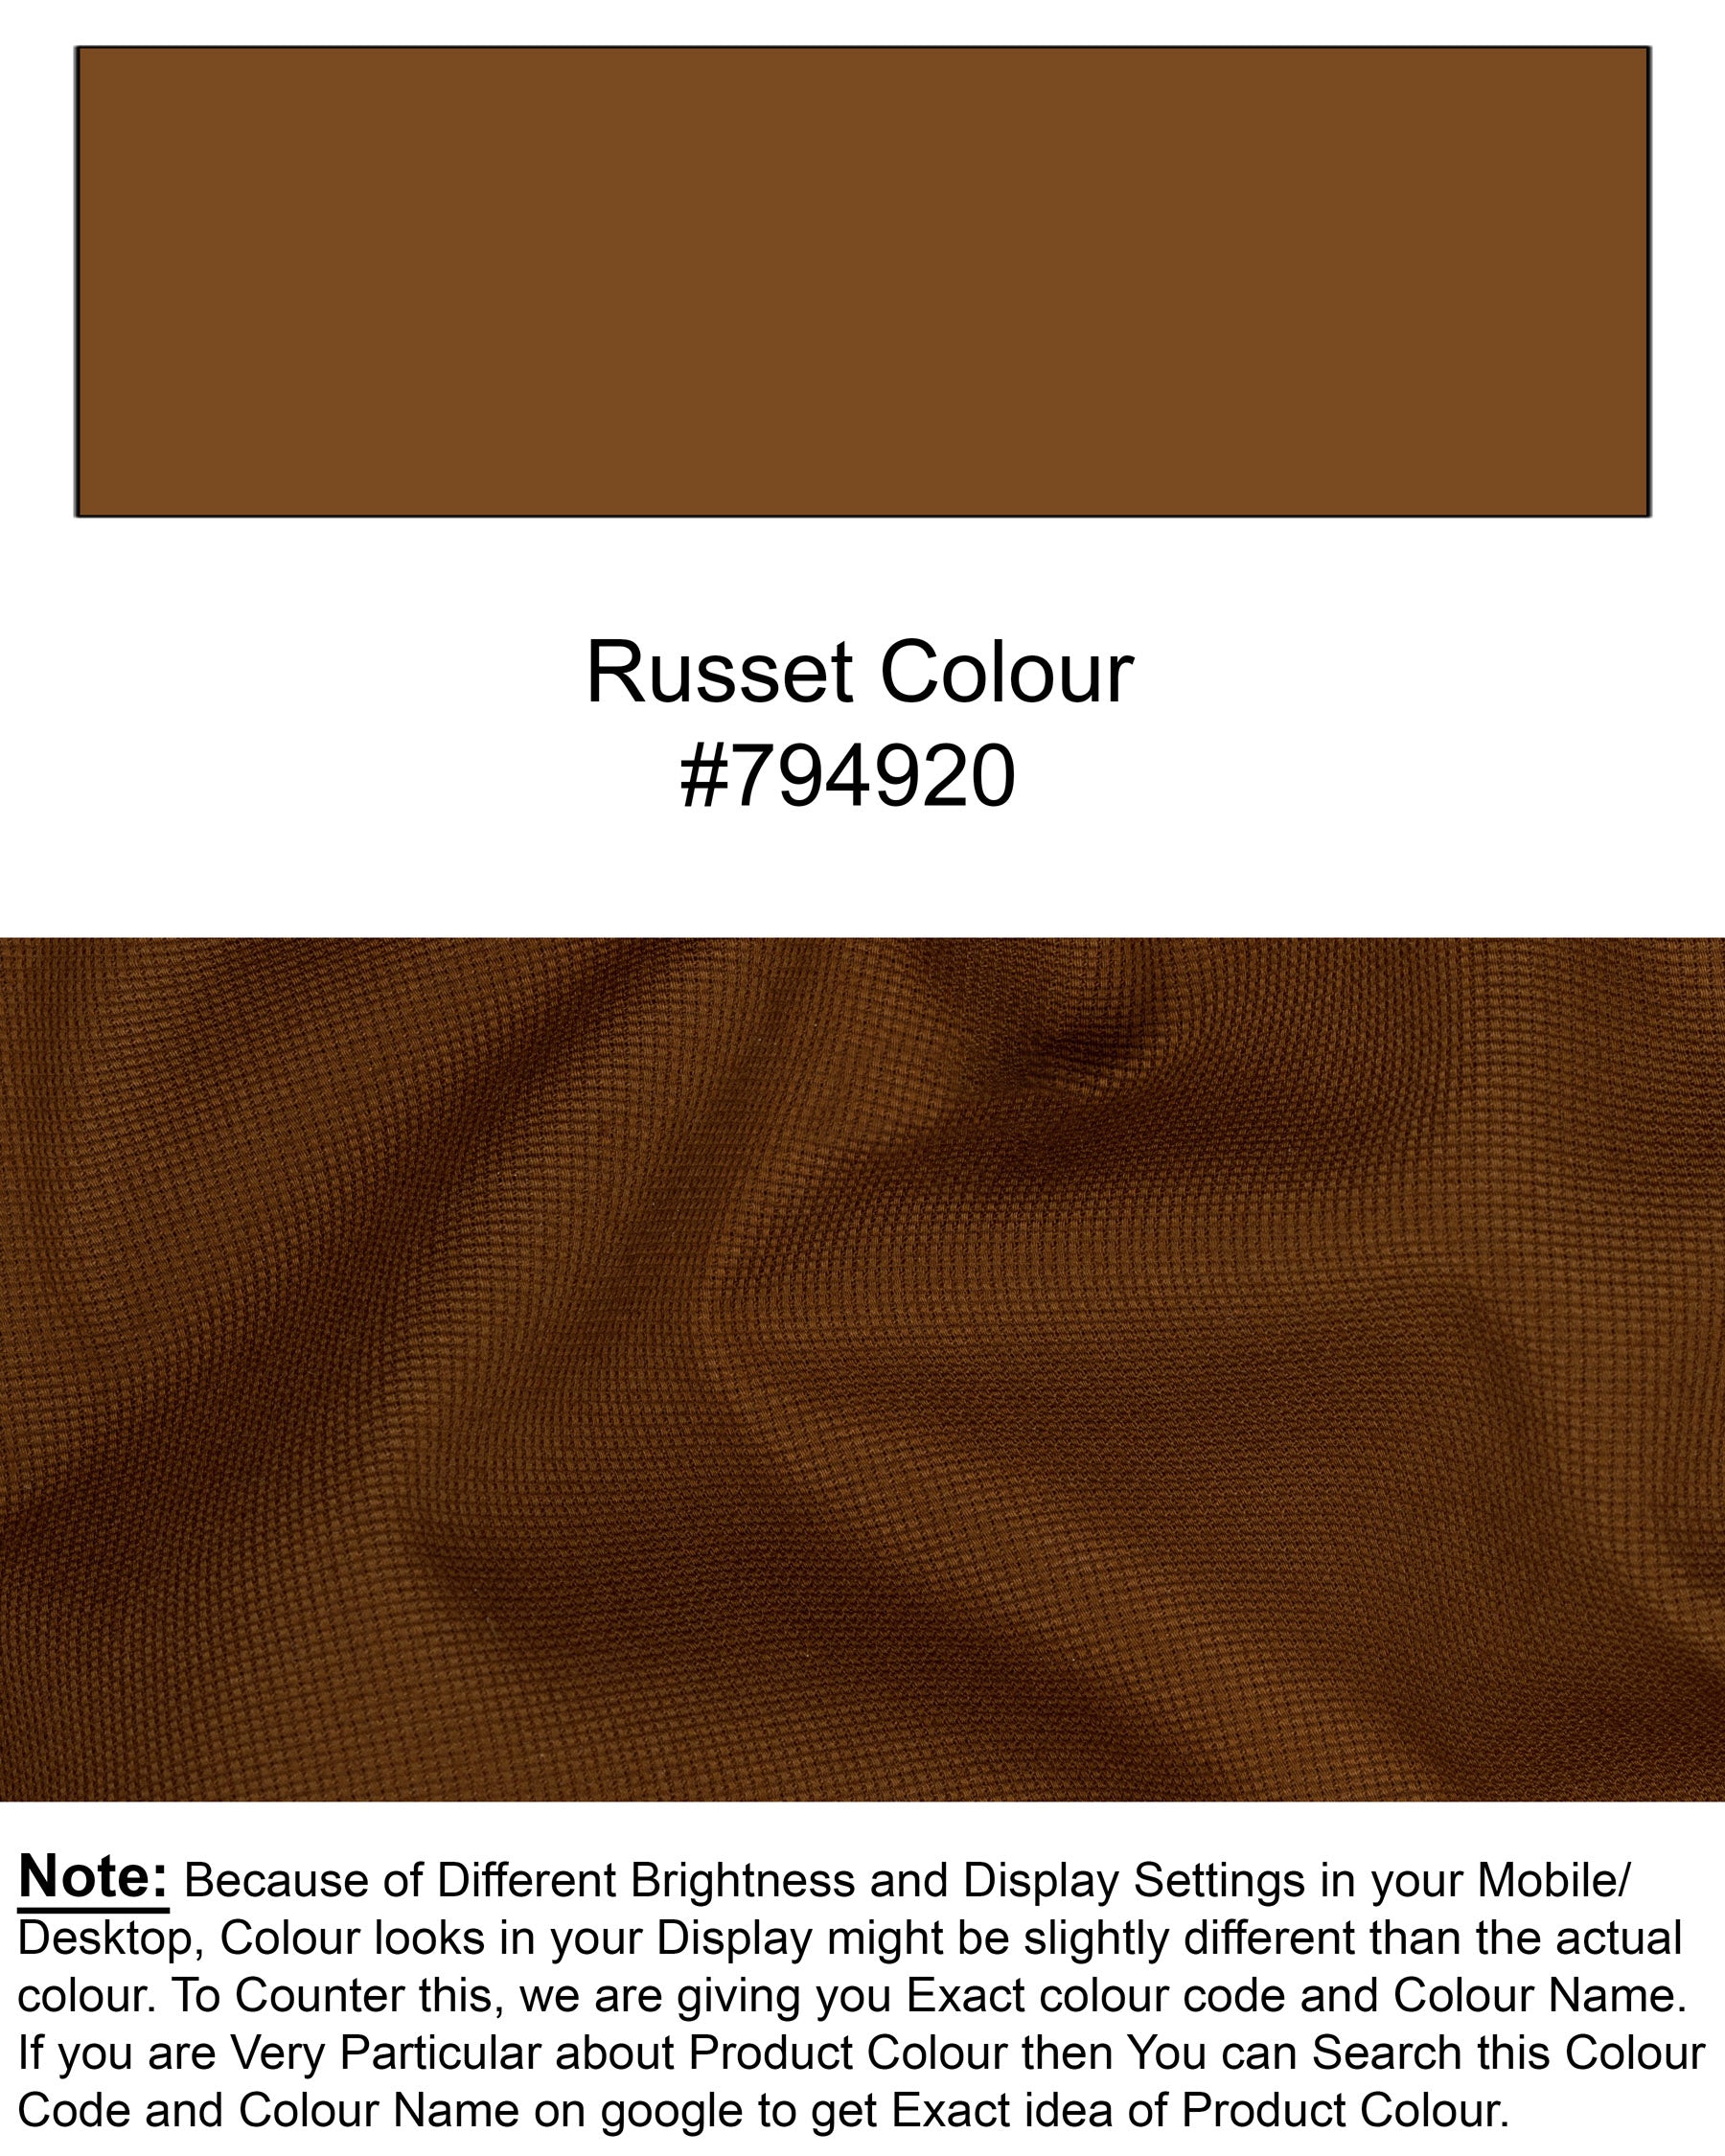 Russet Brown Premium Cotton Belt closure Sports Suit ST1580-D9-36, ST1580-D9-38, ST1580-D9-40, ST1580-D9-42, ST1580-D9-44, ST1580-D9-46, ST1580-D9-48, ST1580-D9-50, ST1580-D9-52, ST1580-D9-54, ST1580-D9-56, ST1580-D9-58, ST1580-D9-60